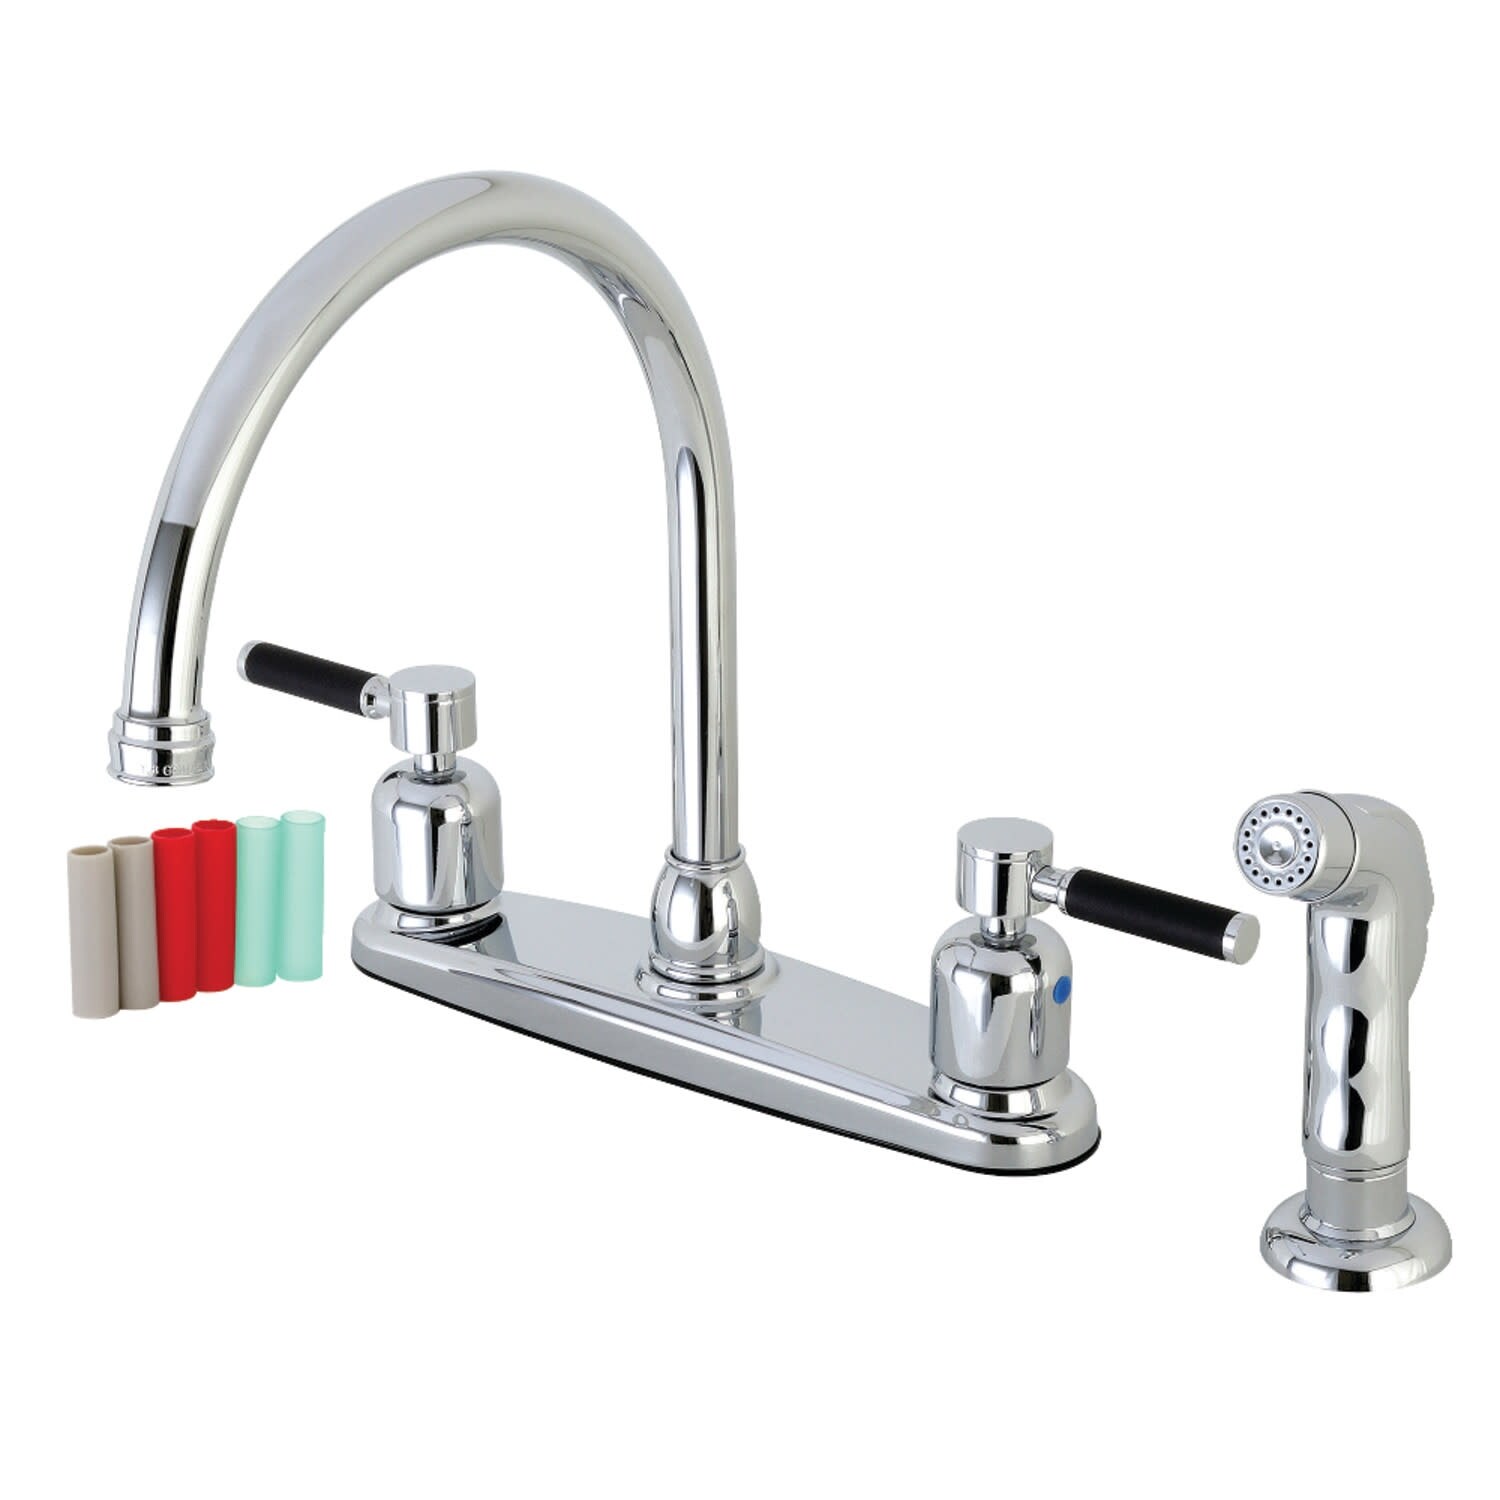 Kingston Brass Kaiser 1.8 GPM Standard Kitchen Faucet - Includes Side